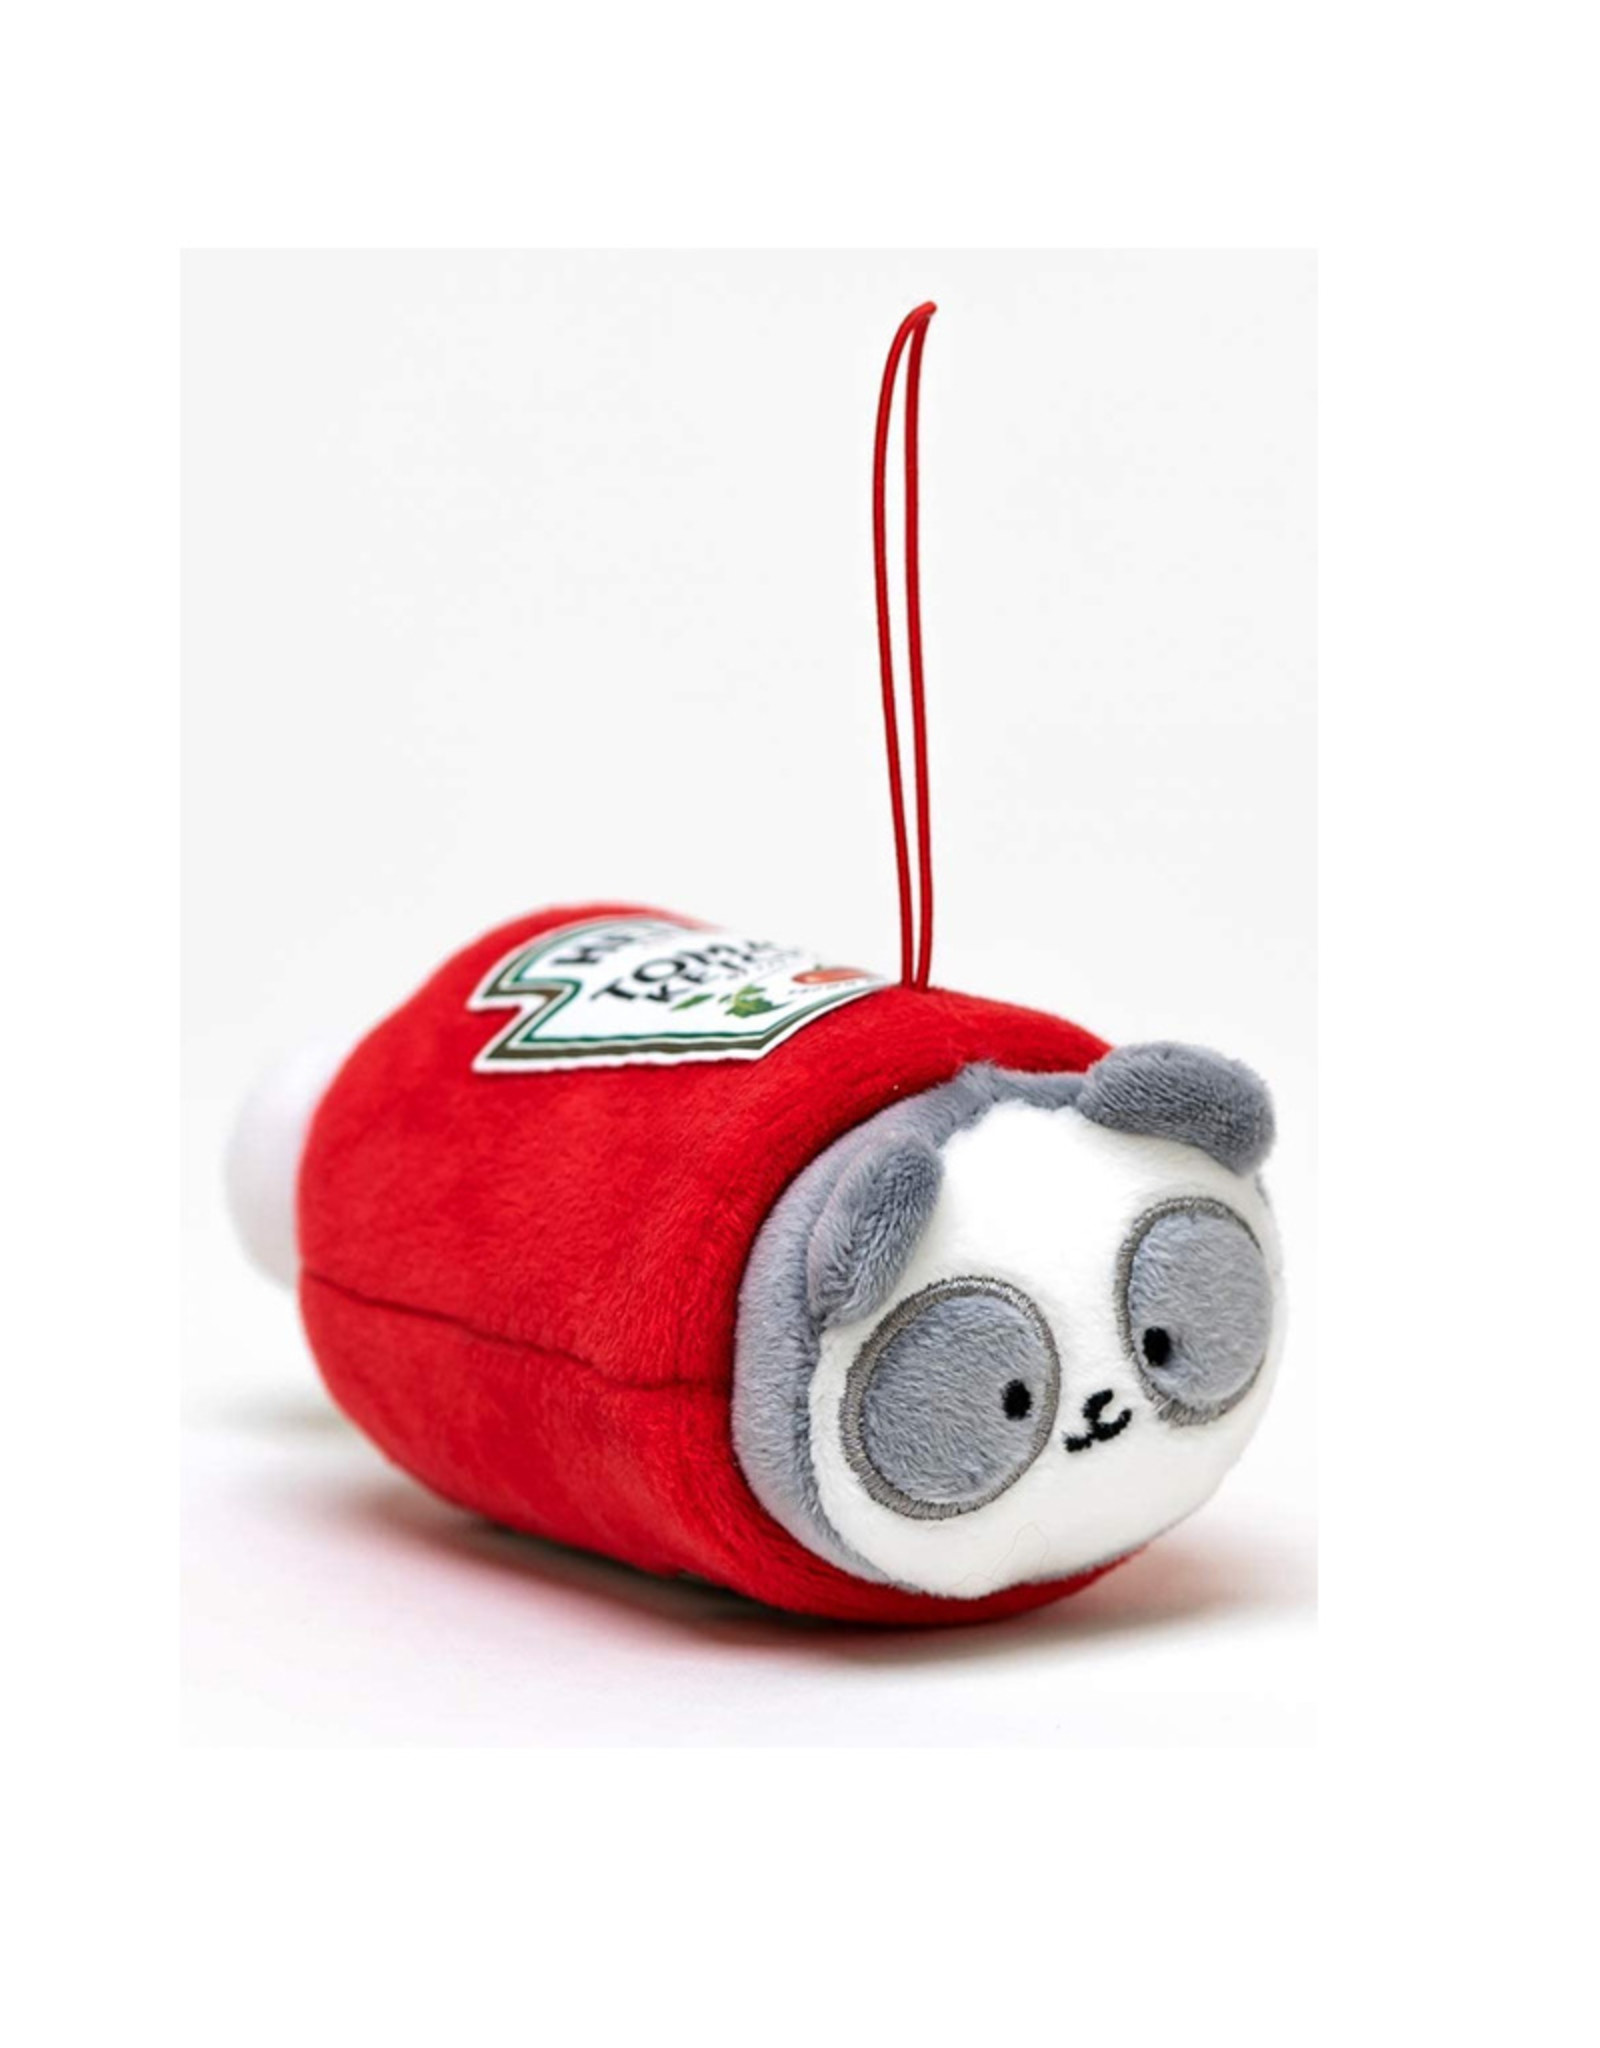 Coosy Anirollz: Heinz Pandaroll Plush Keychain